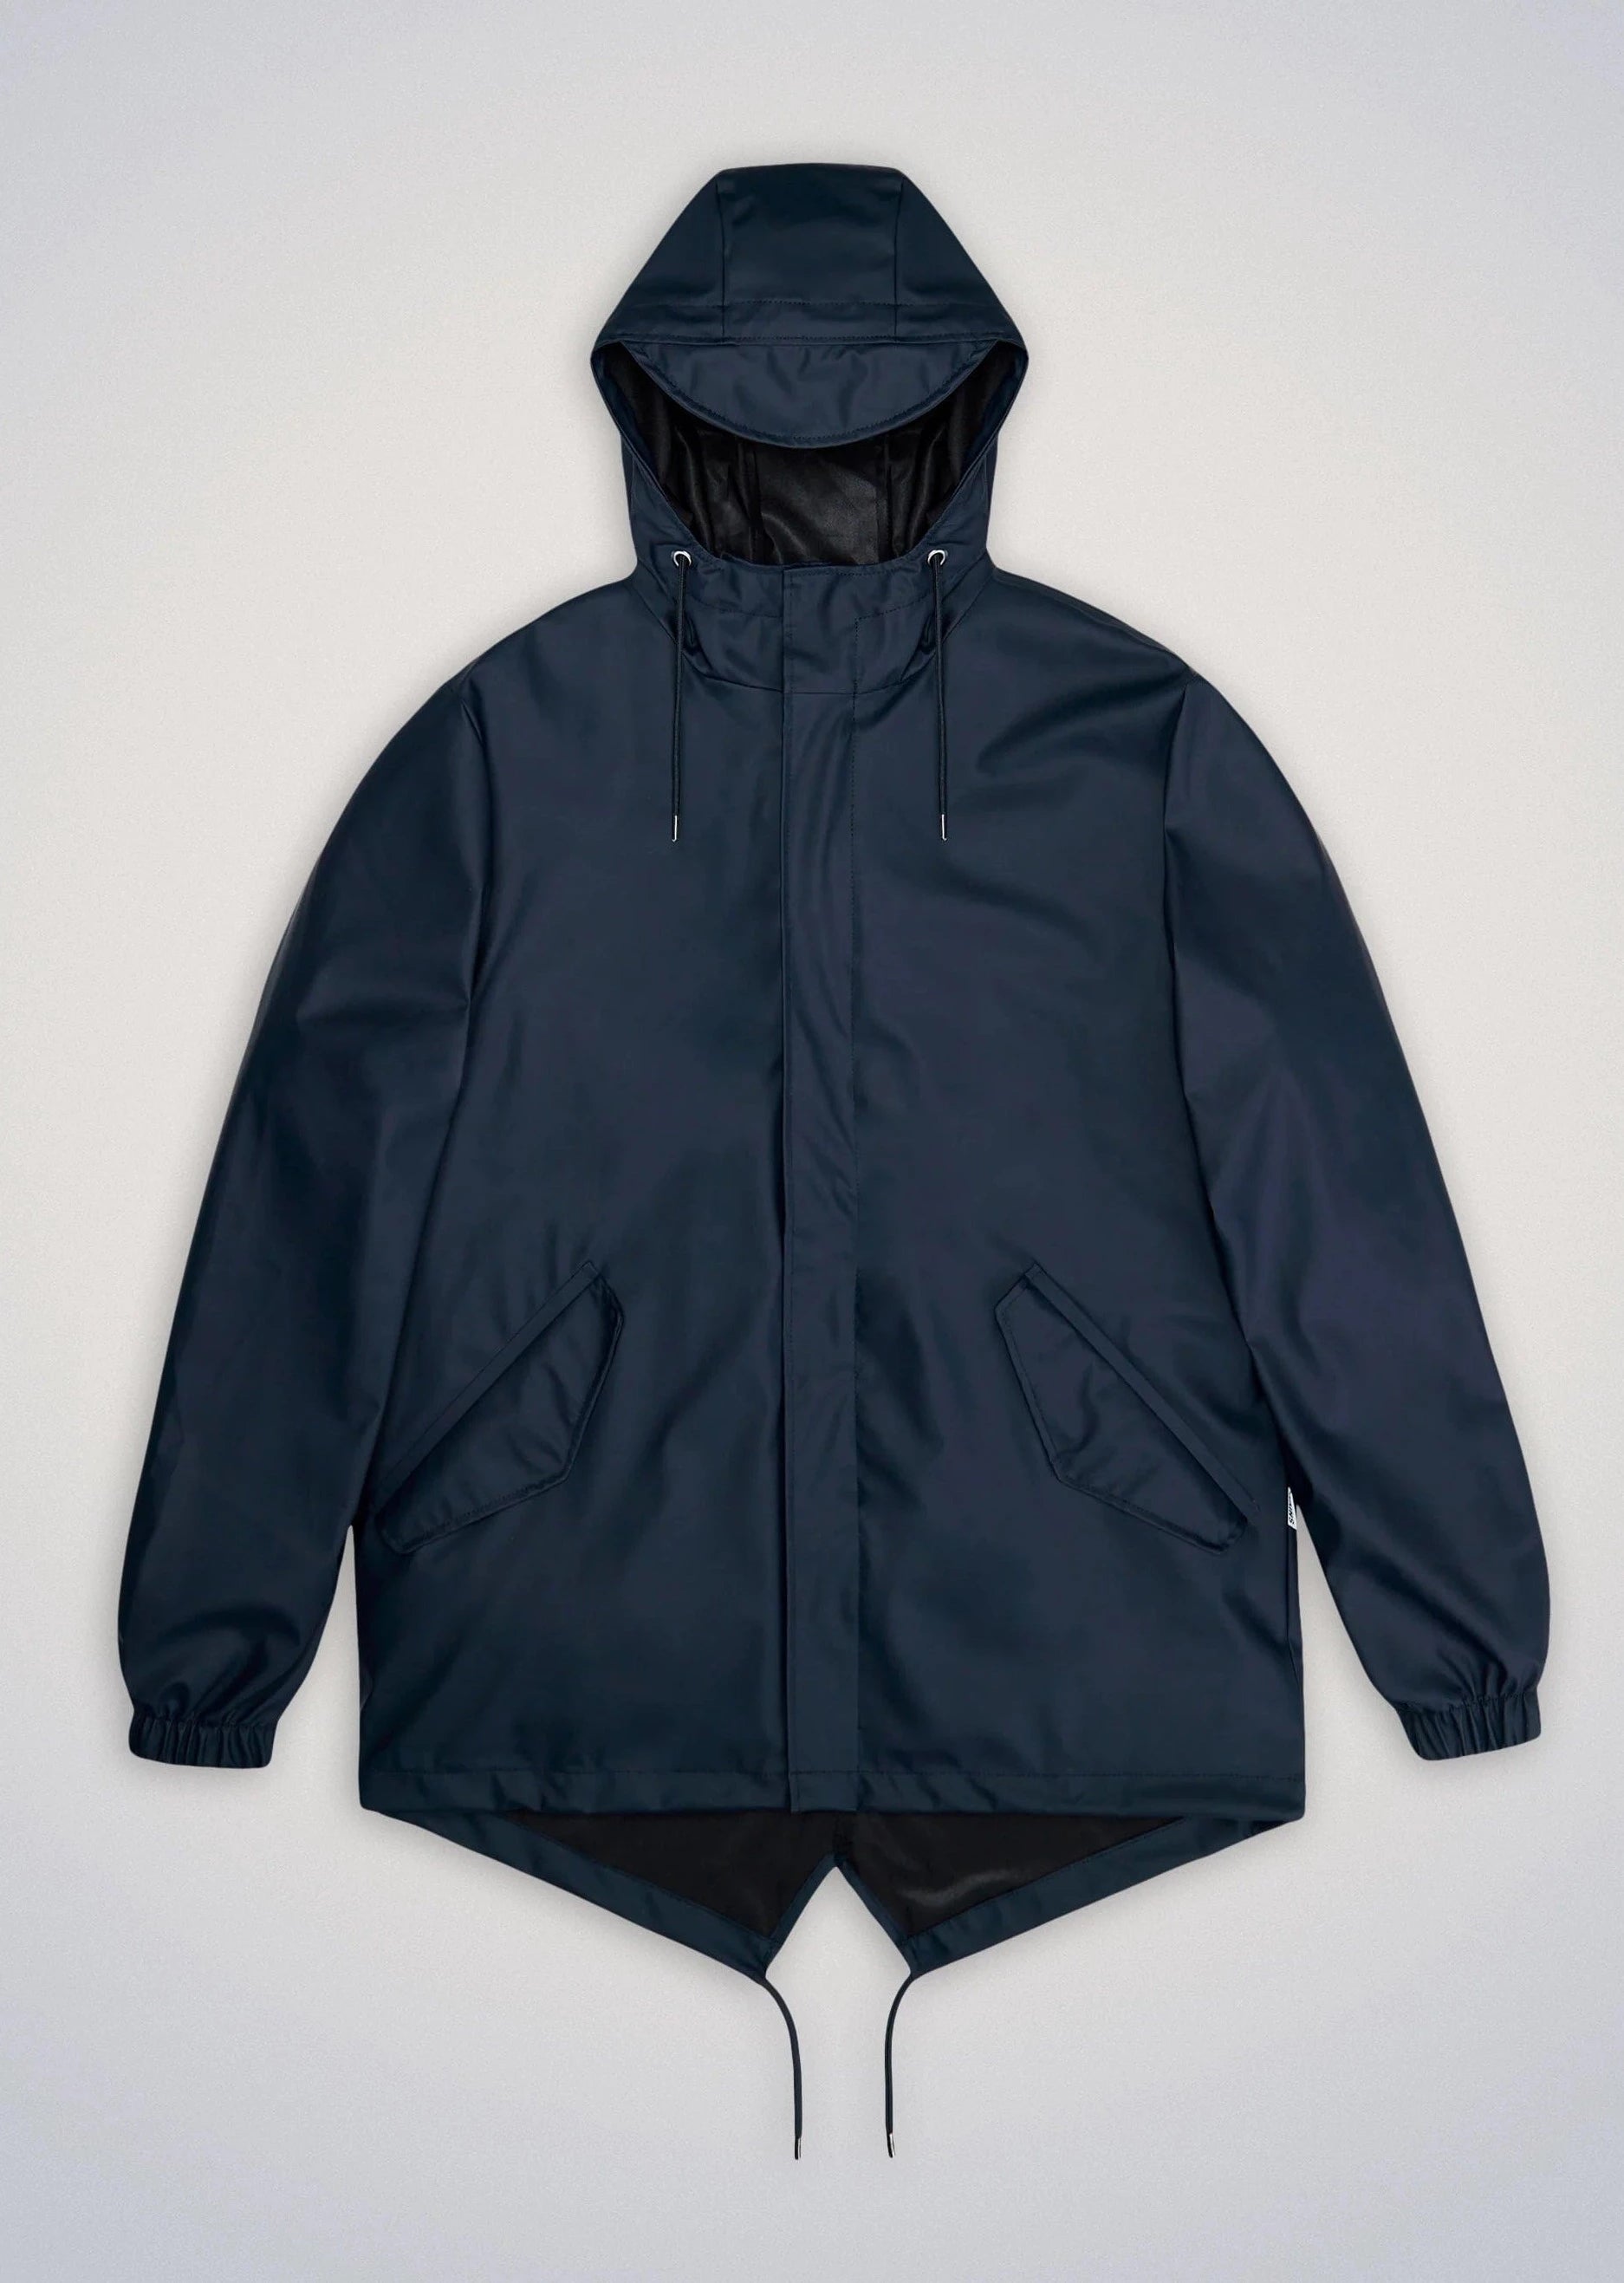 Rains Veste/Blouson Navy / XS Imperméable Rains - Fishtail Jacket